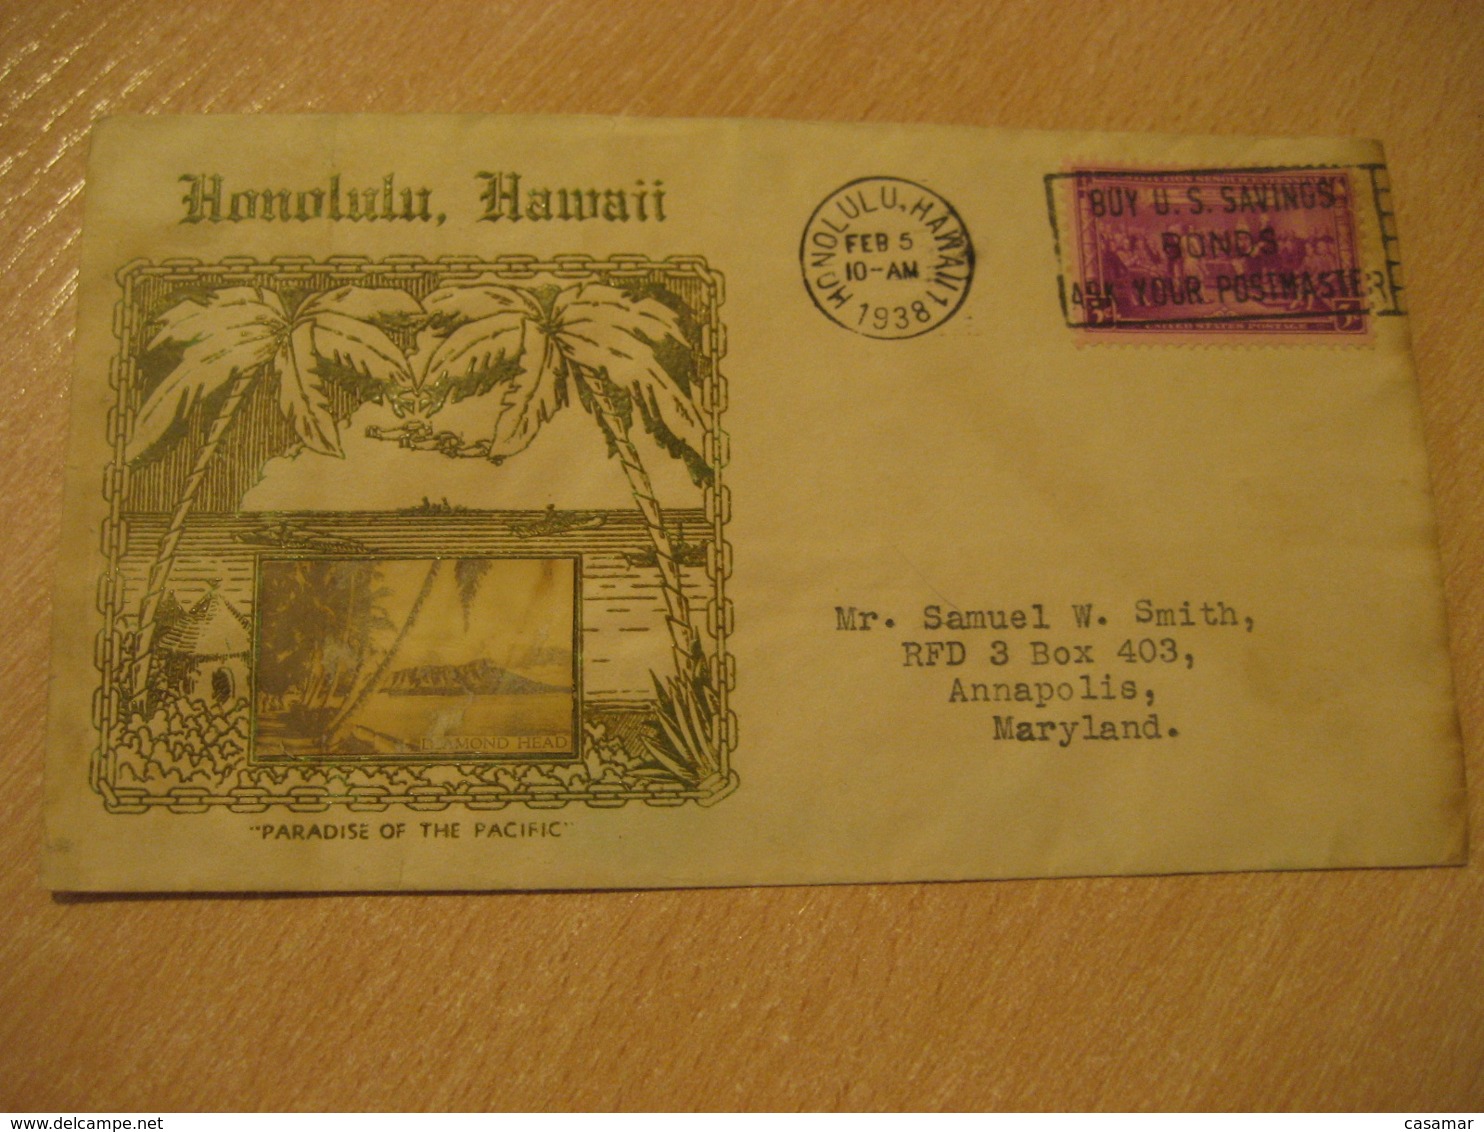 HONOLULU 1938 ACME Trans-Pacific Service Paradise Of Pacific Diamond Head Buy U.S. Savings Bonds HAWAII Cancel Cover USA - Hawaii